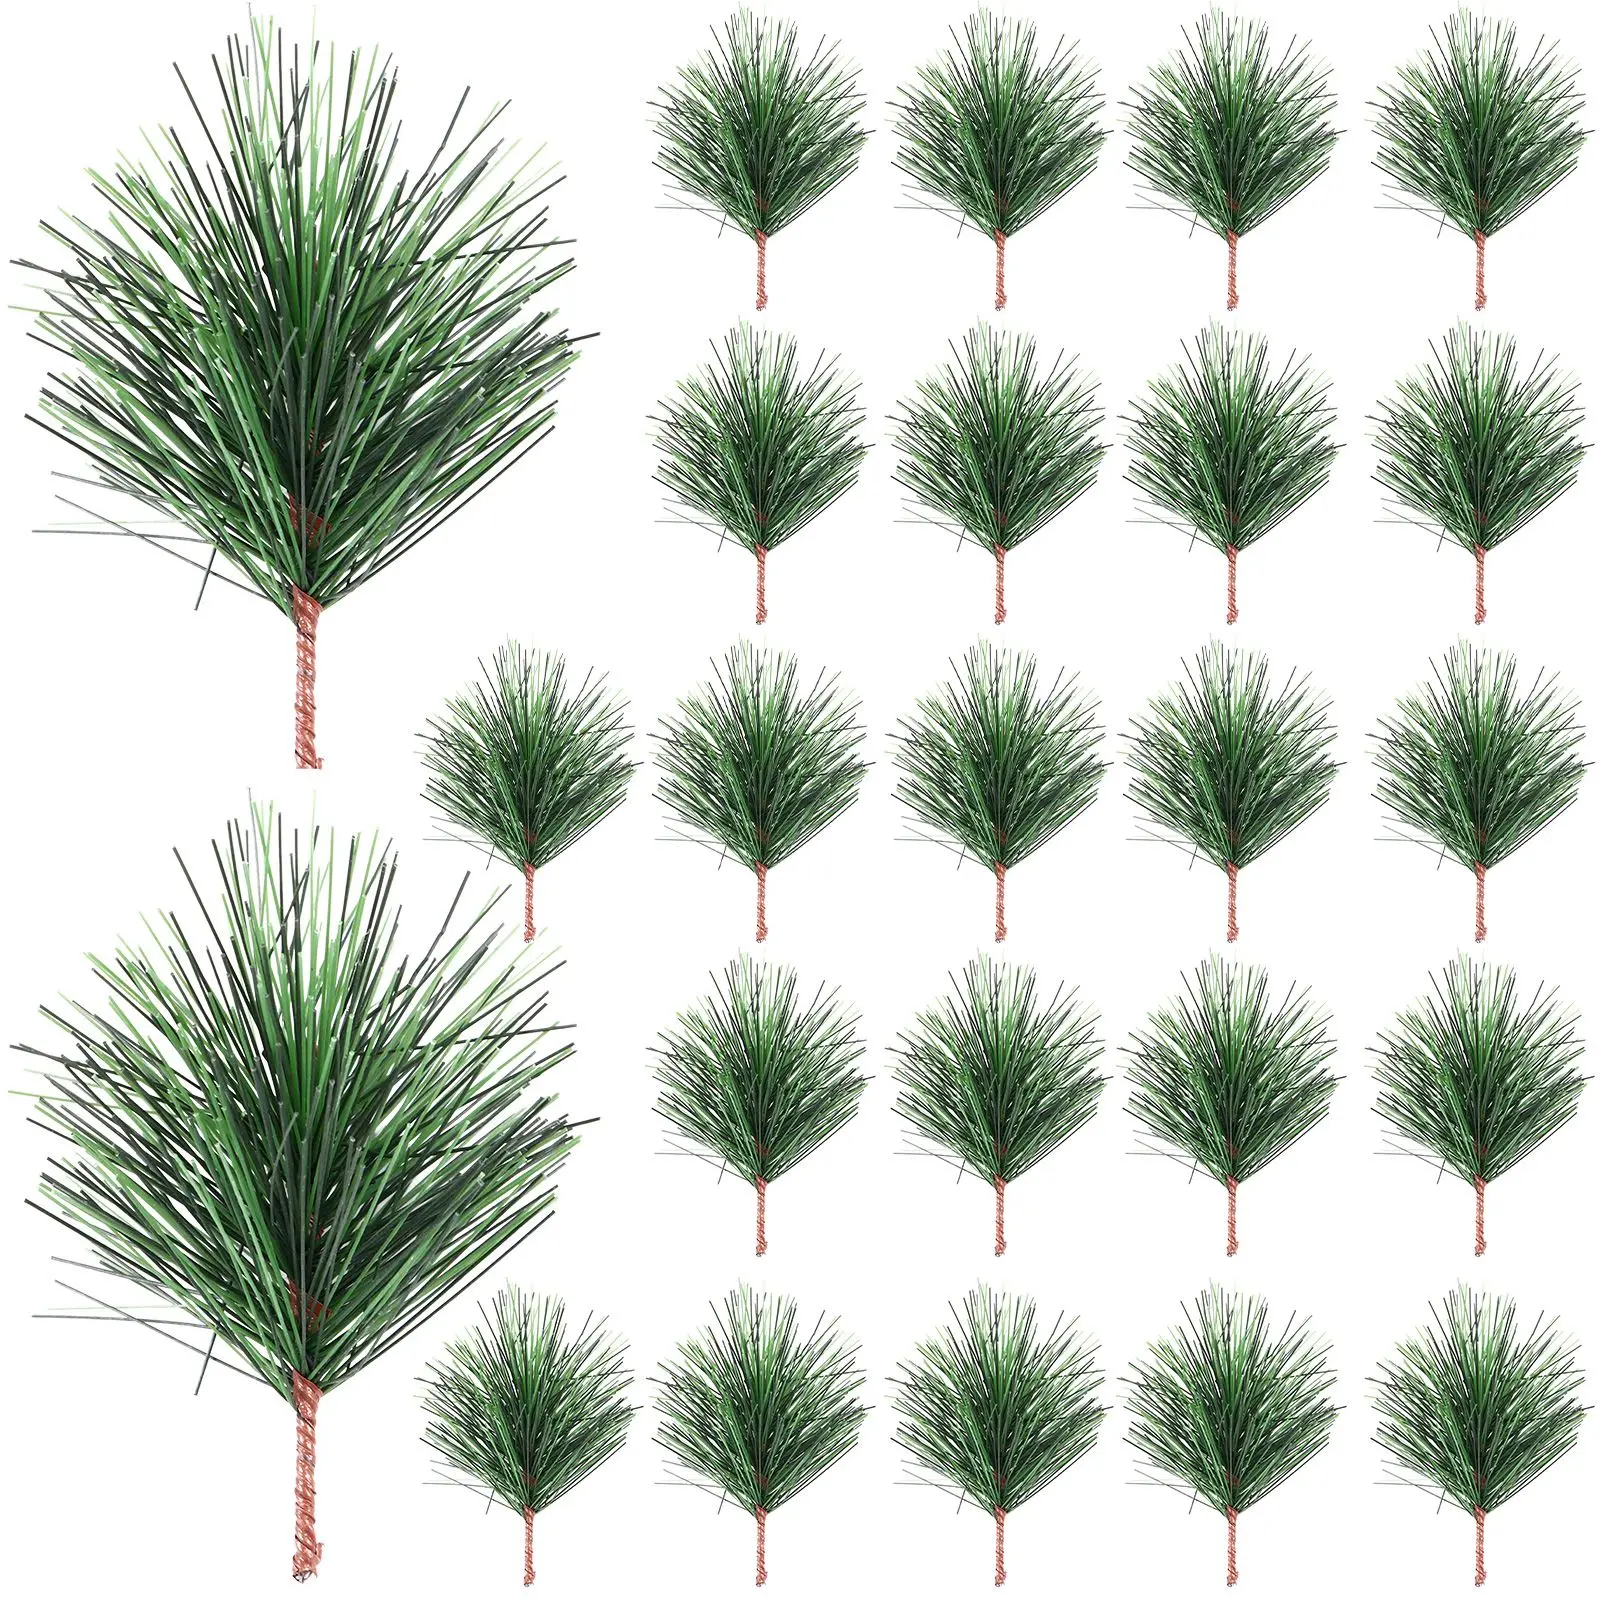 

24Pcs Creative Pine Picks Novelty Simulation Christmas Pine Branches Decors